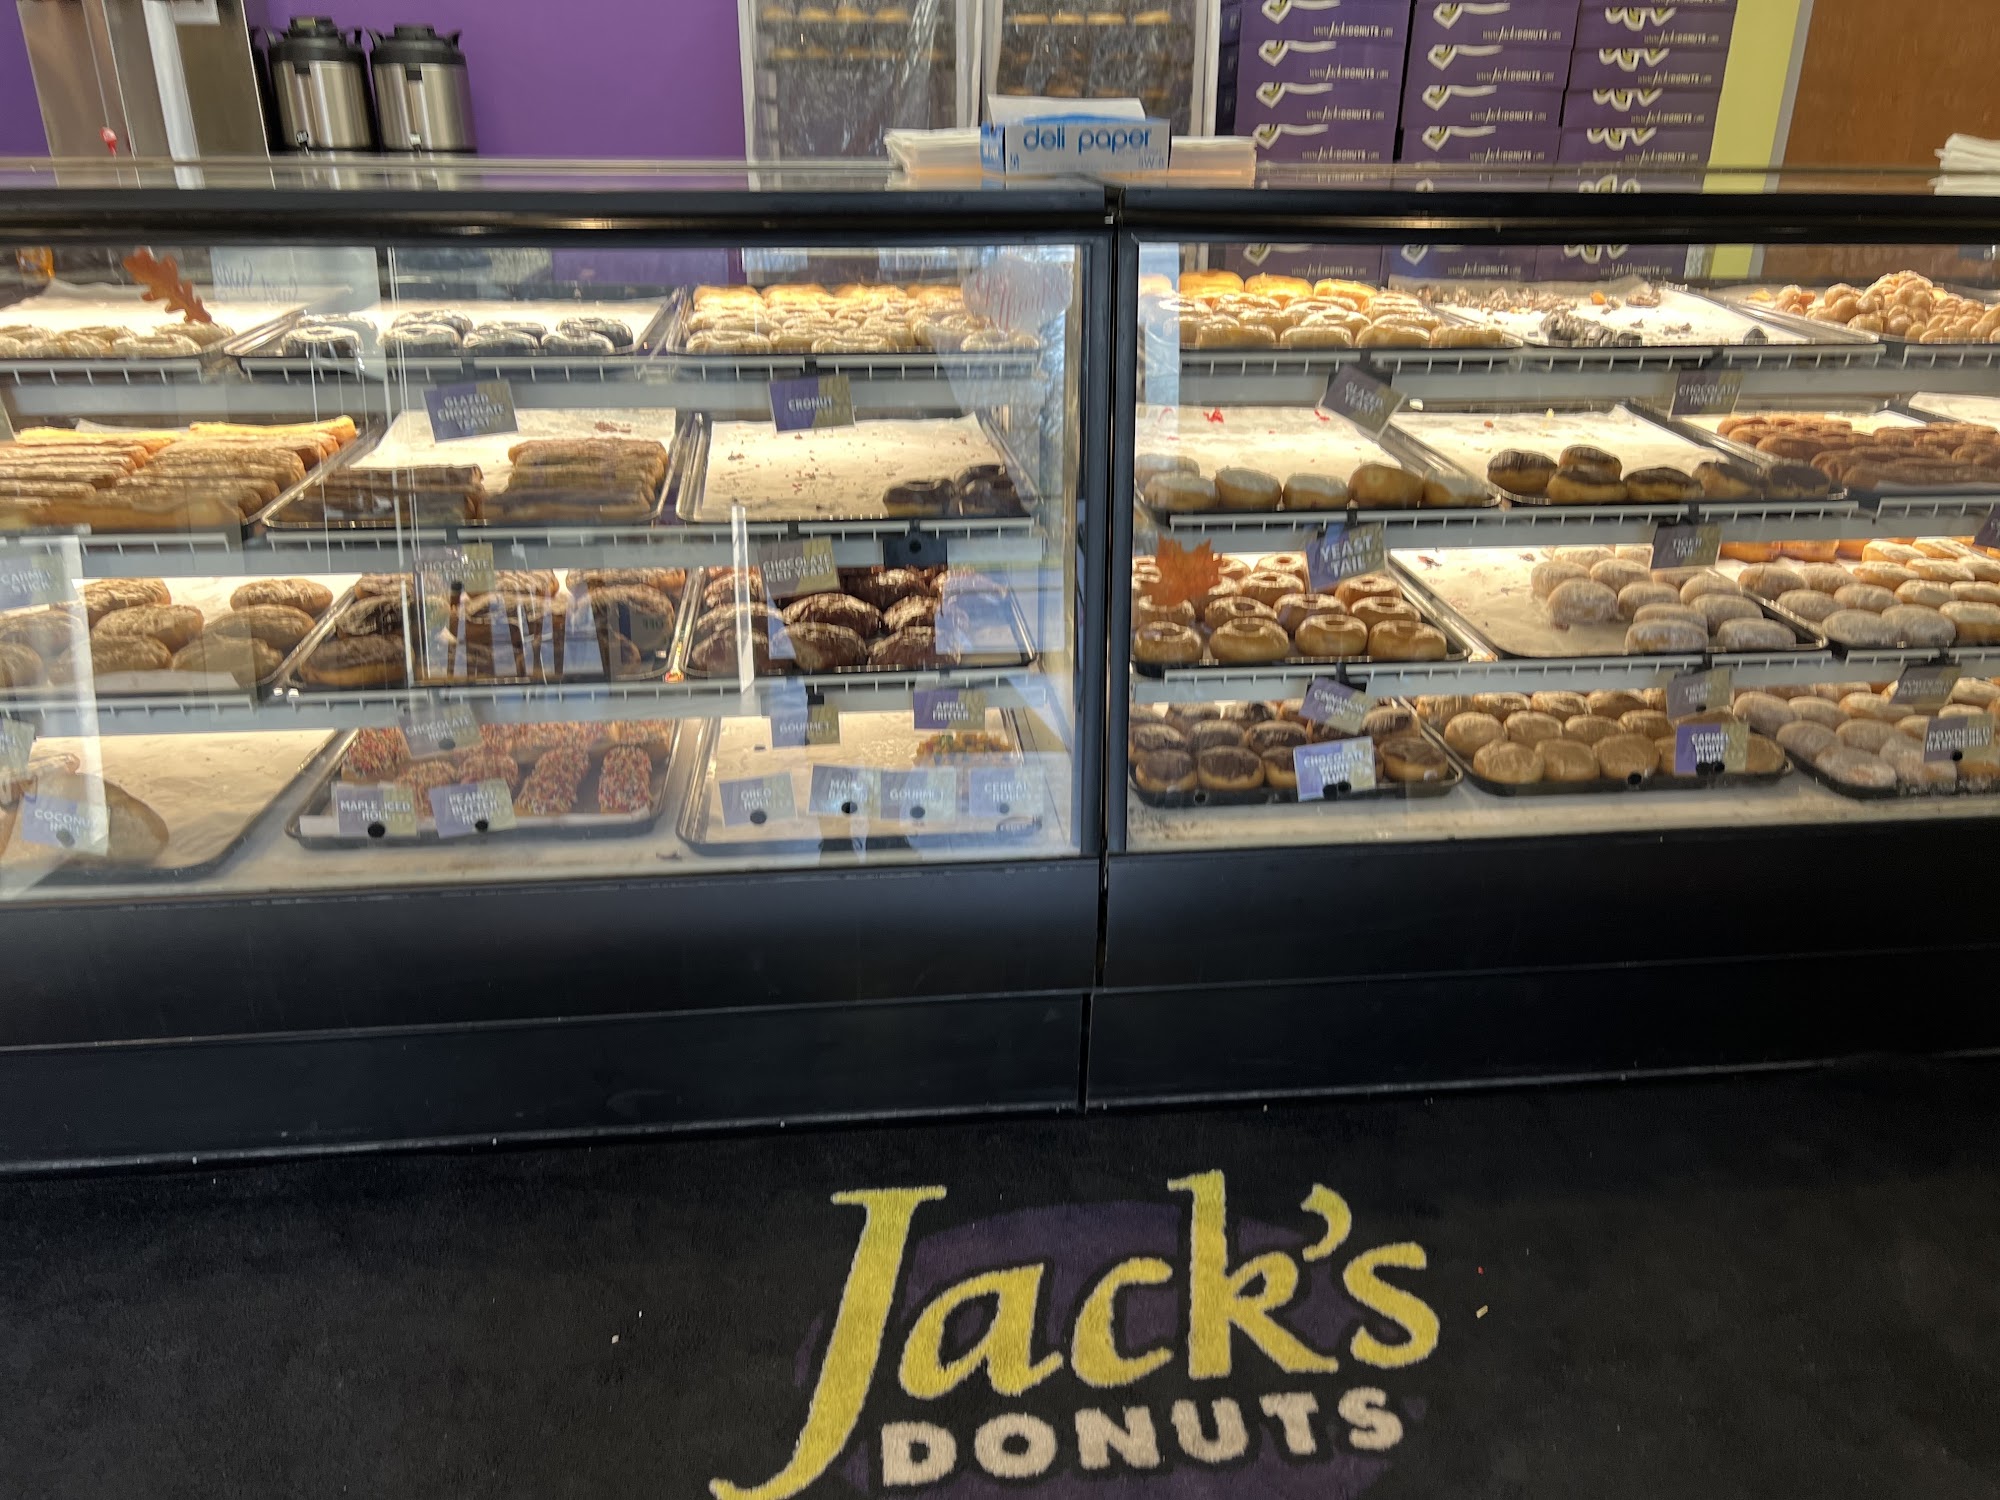 Jack's donuts